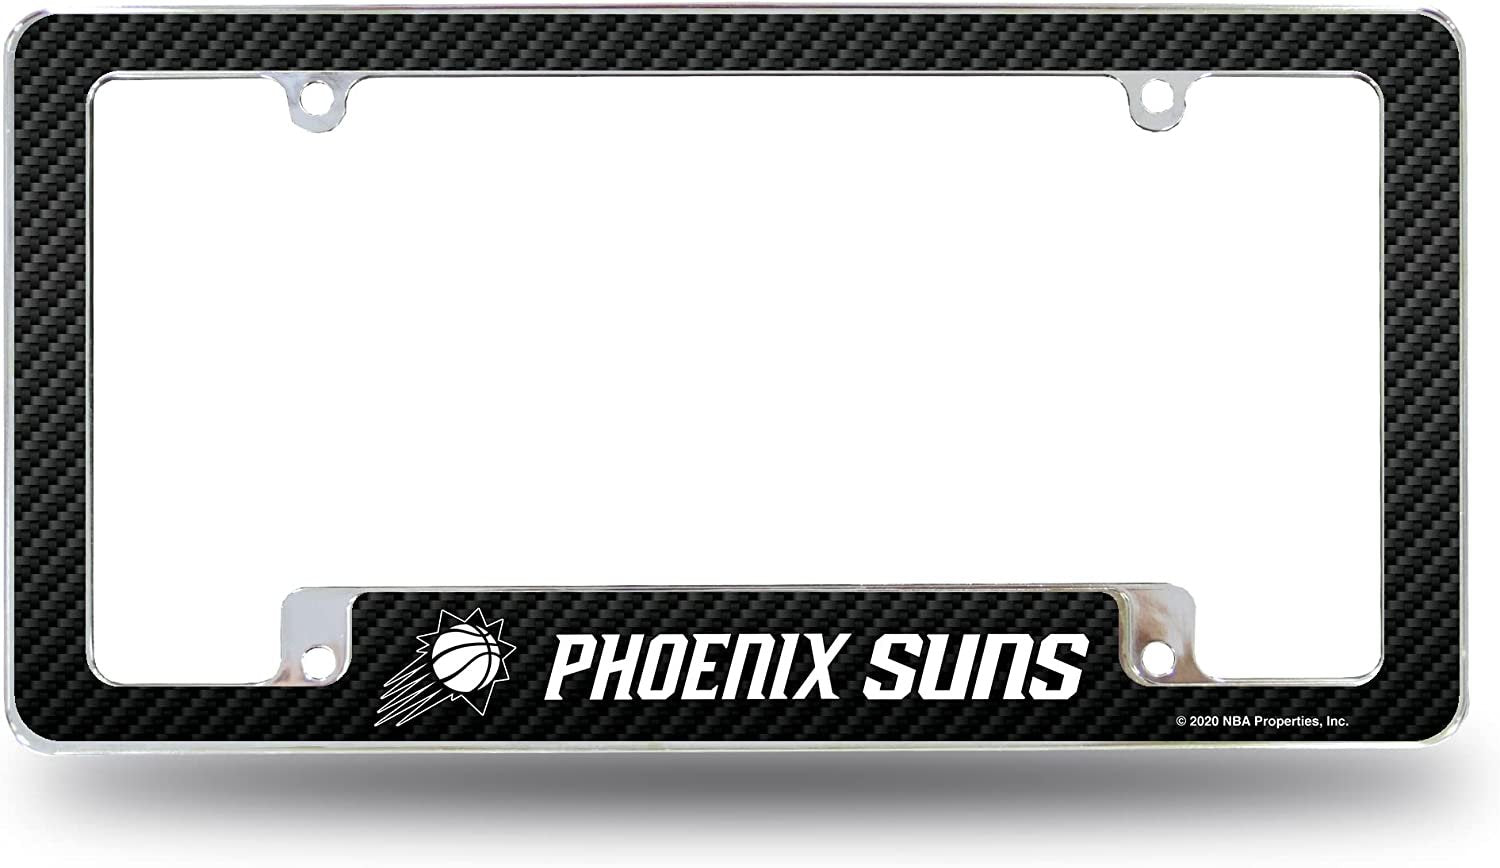 Phoenix Suns Metal License Plate Frame Chrome Tag Cover Carbon Fiber Design 6x12 Inch